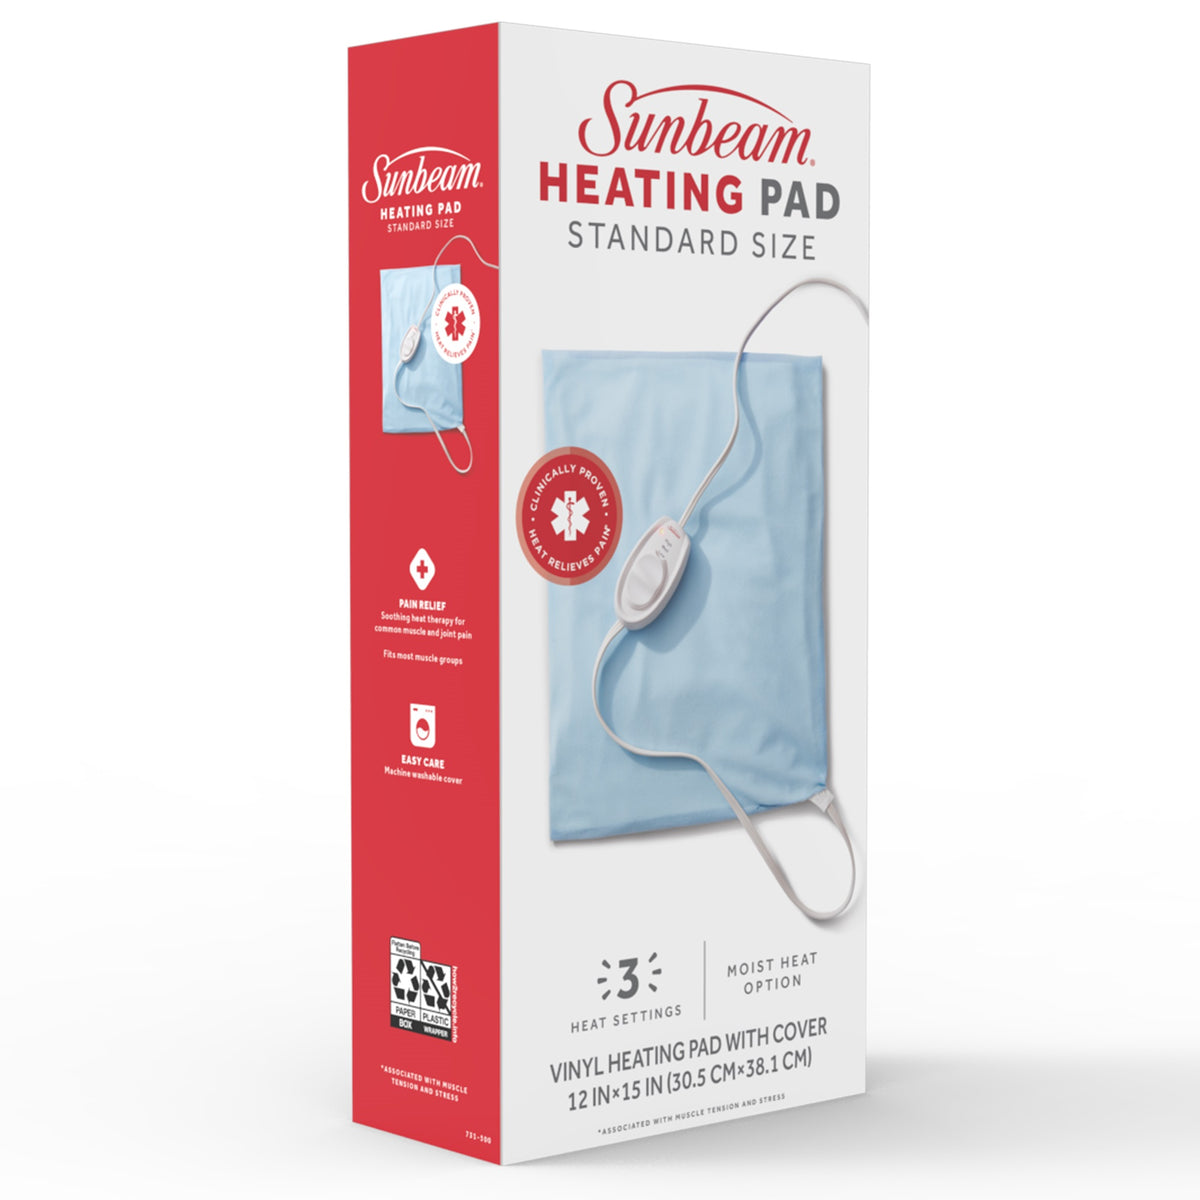 Sunbeam 2101860 Standard Size Heating Pad, Light Blue